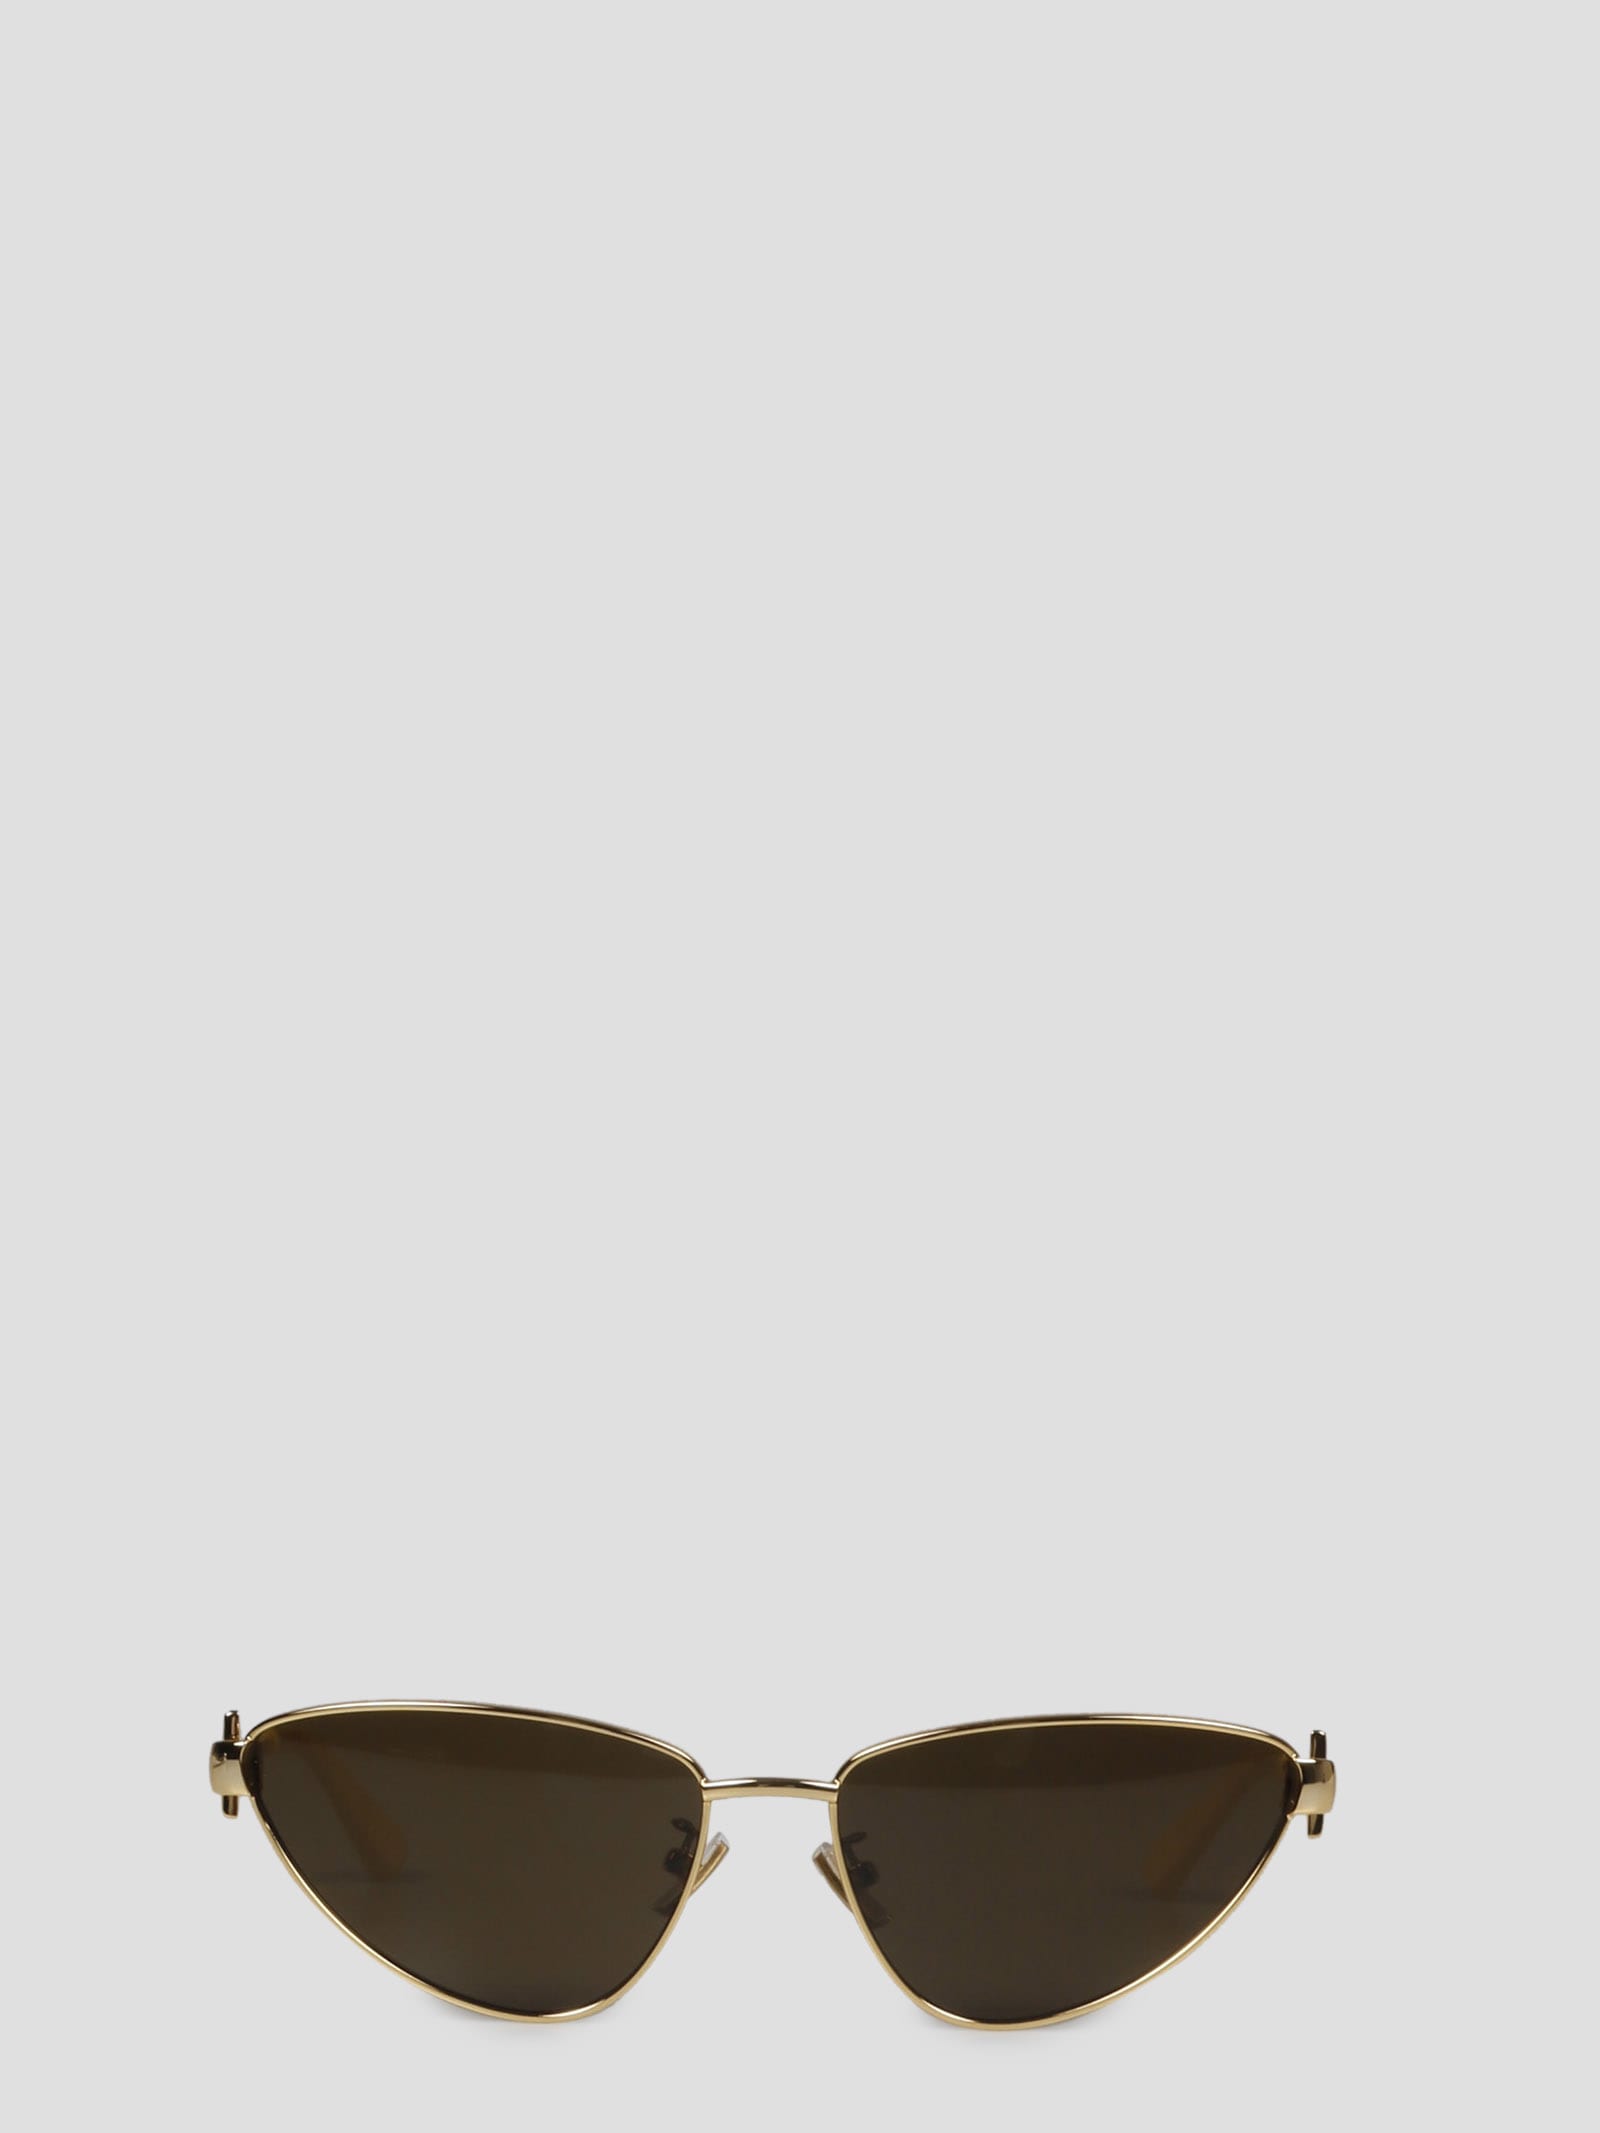 Bottega Veneta Eyewear Turn Cut Eye Sunglasses